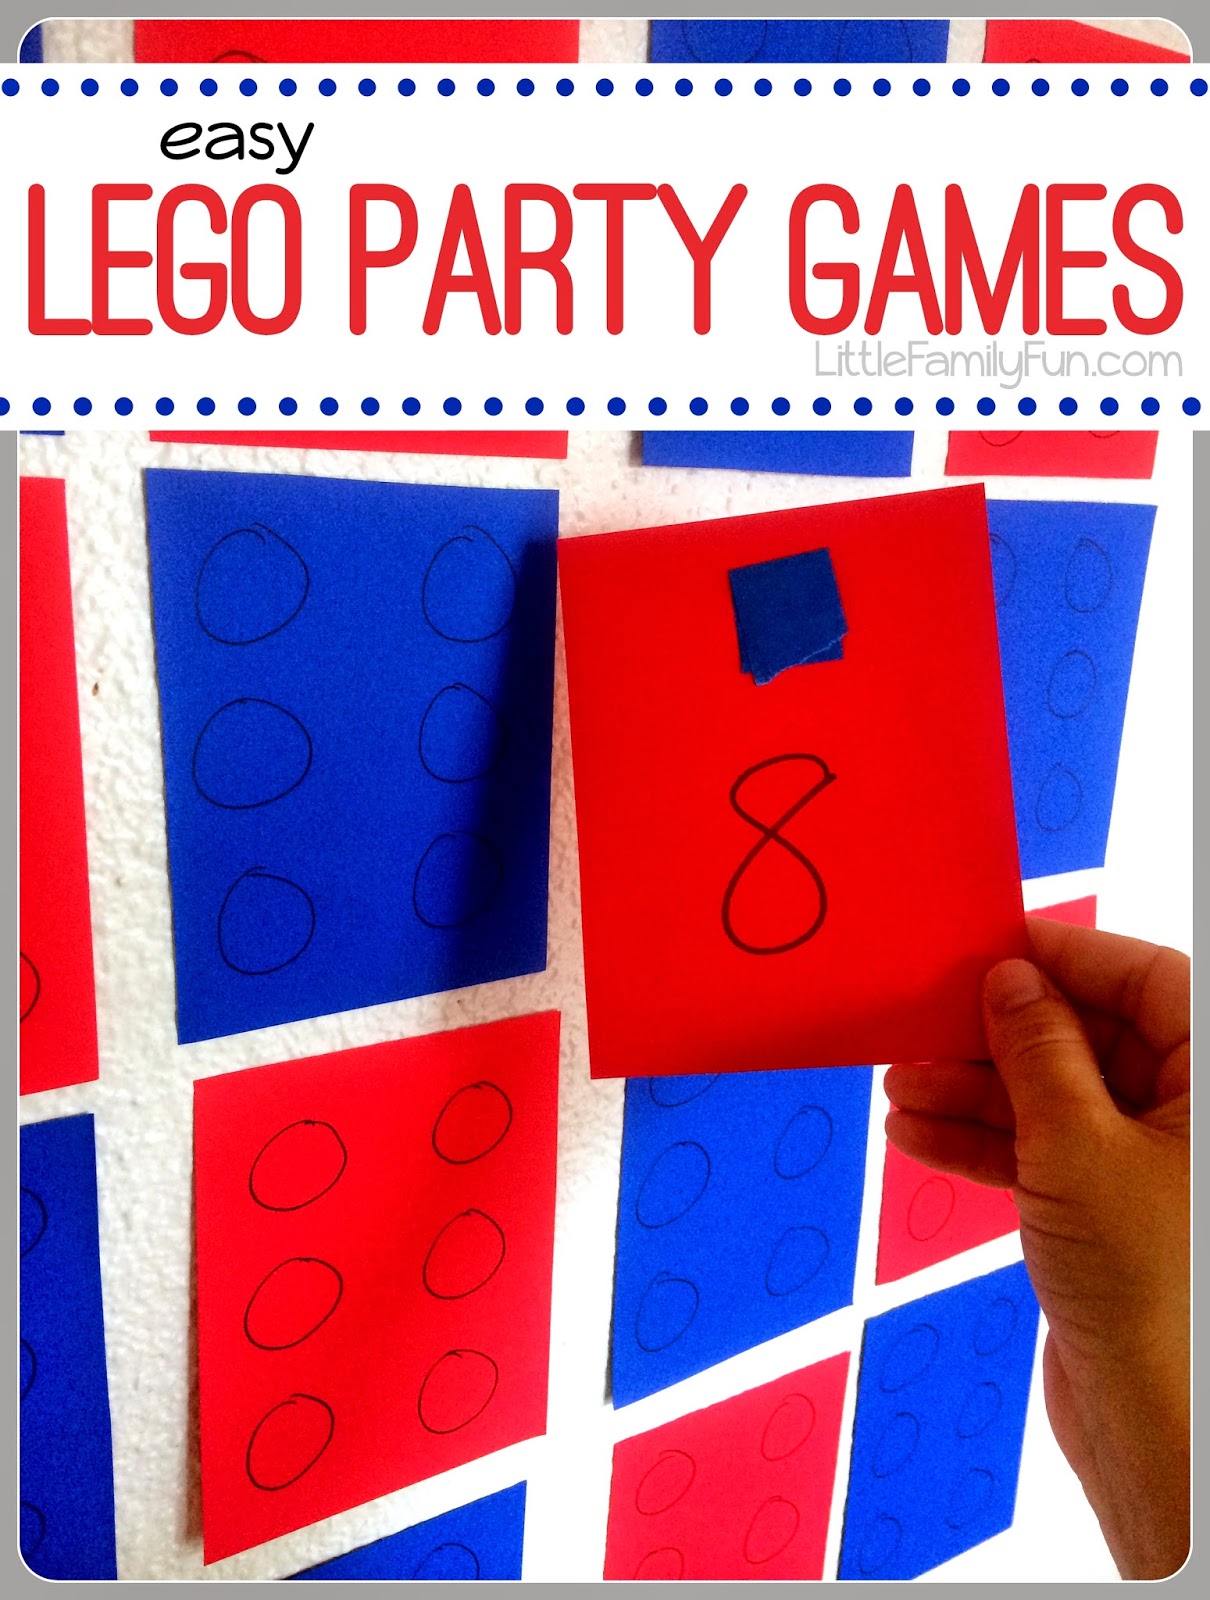 http://www.littlefamilyfun.com/2014/04/lego-party-games.html